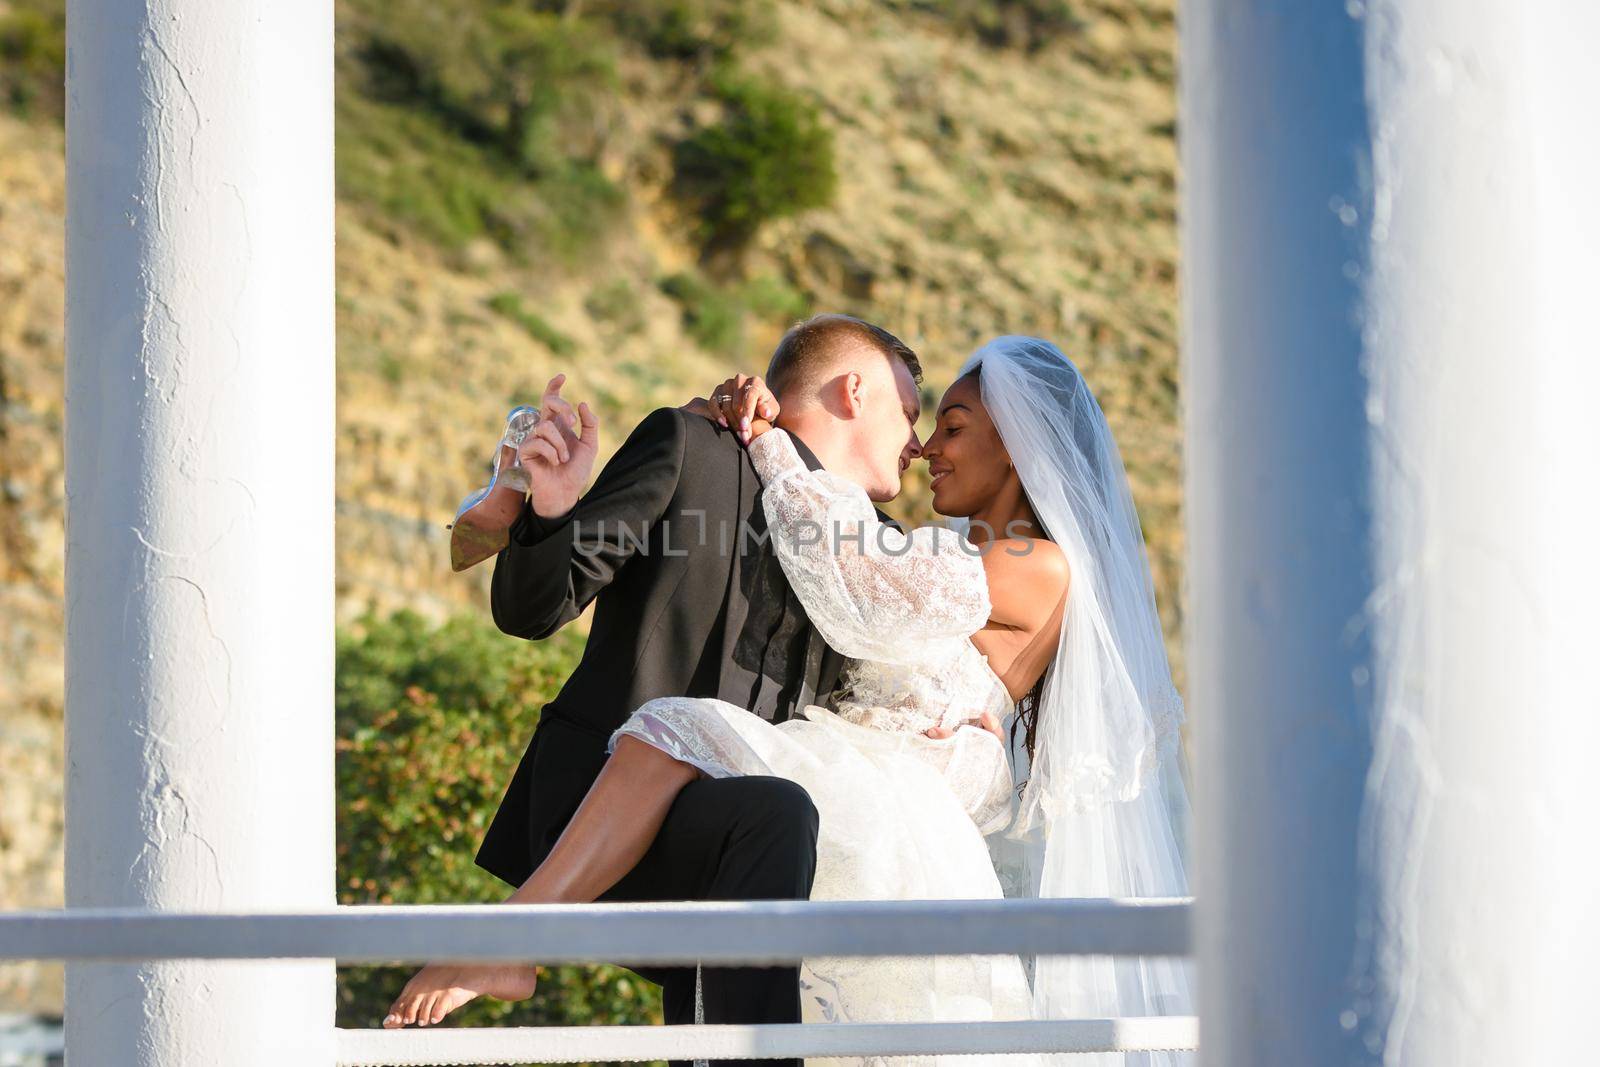 Young beautiful interracial newlyweds kissing in the gazebo